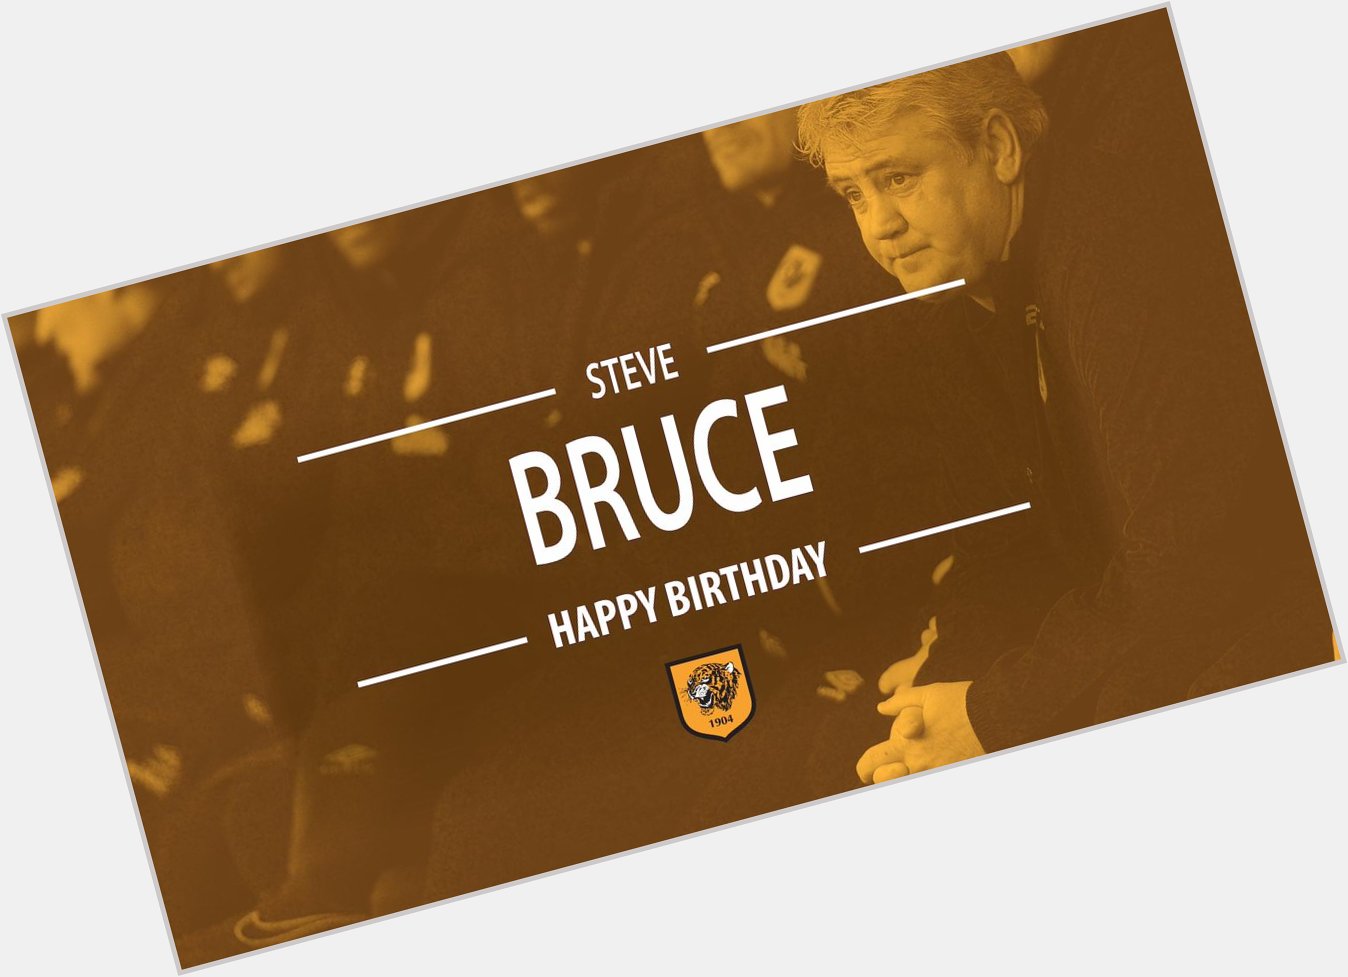 HAPPY BIRTHDAY: Steve Bruce celebrates his 54th birthday today!  